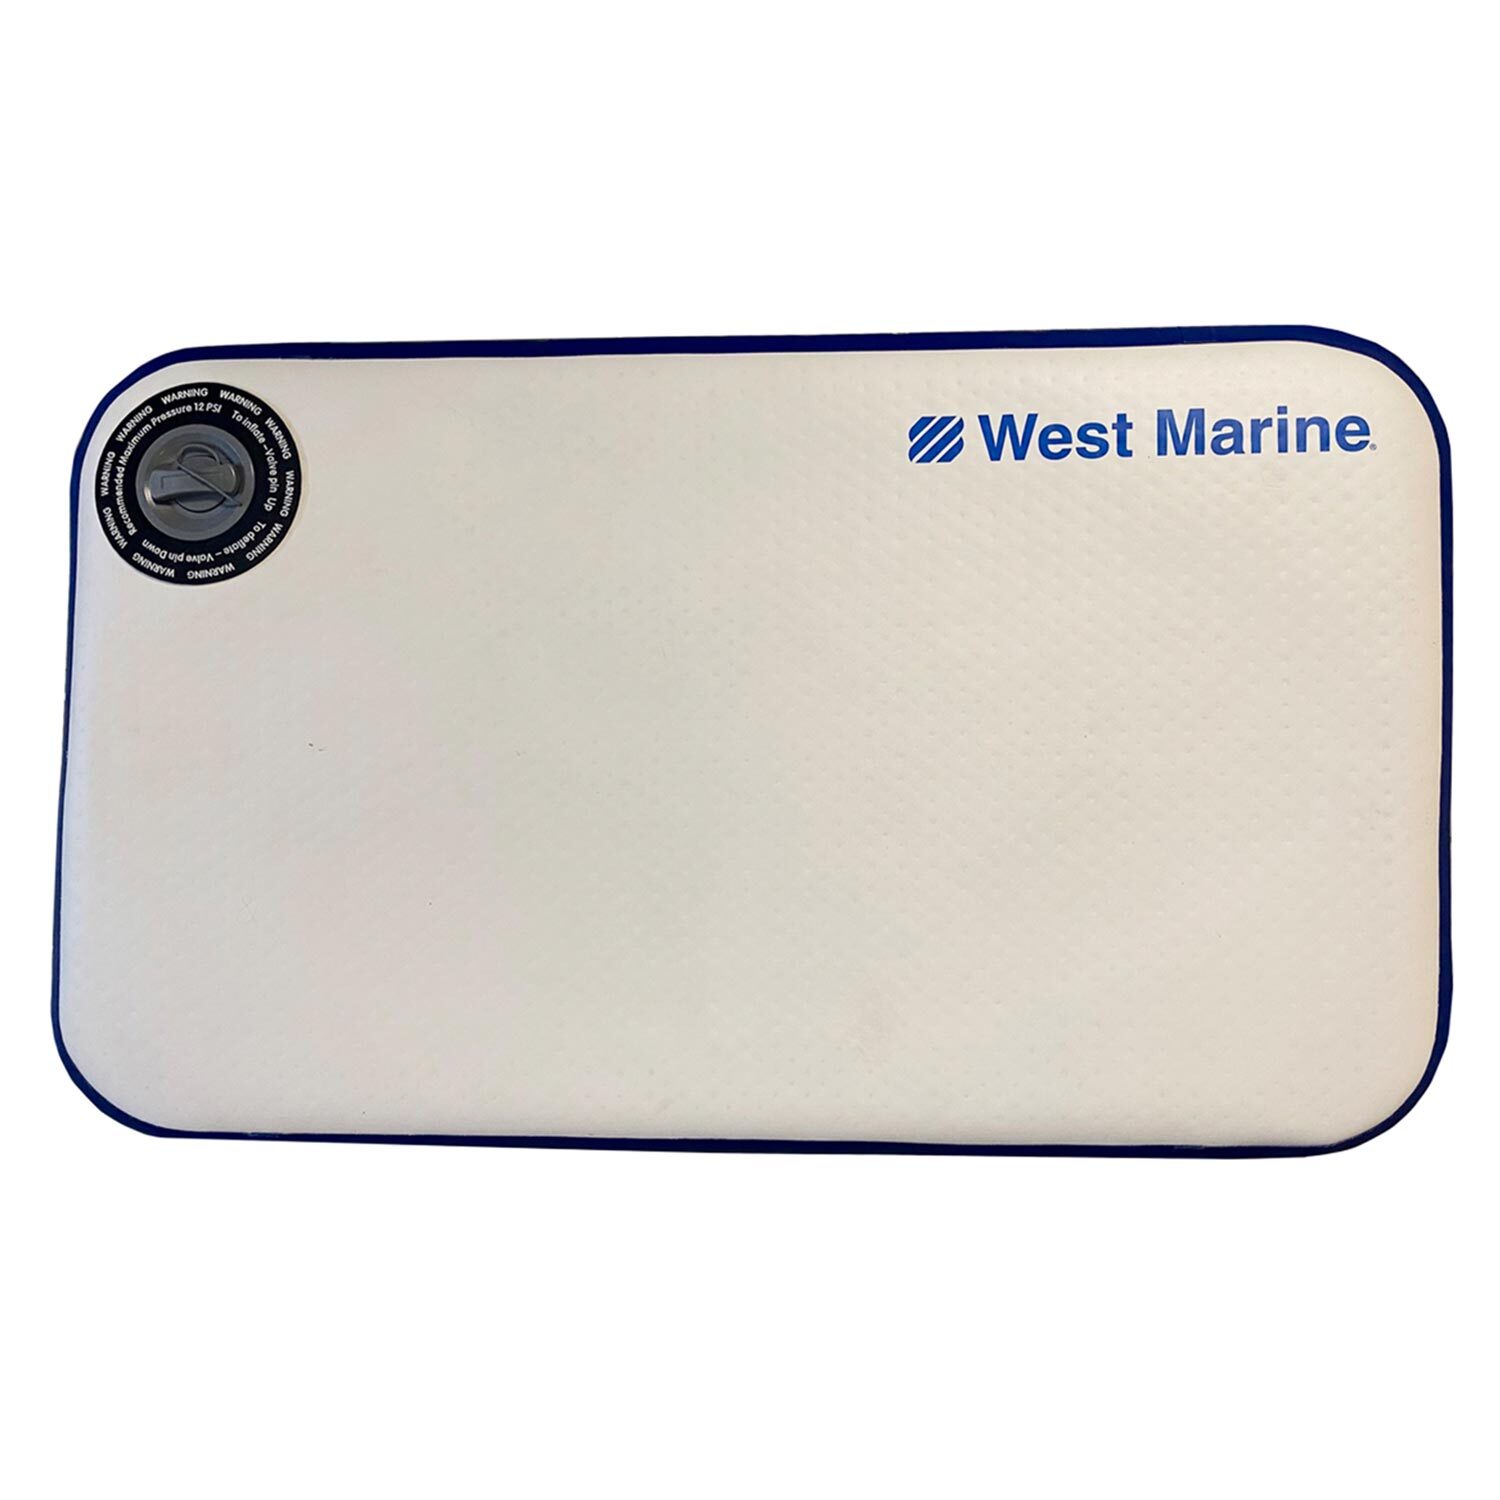 WEST MARINE Cooler Cushion for 120 qt. Premium Marine Cooler